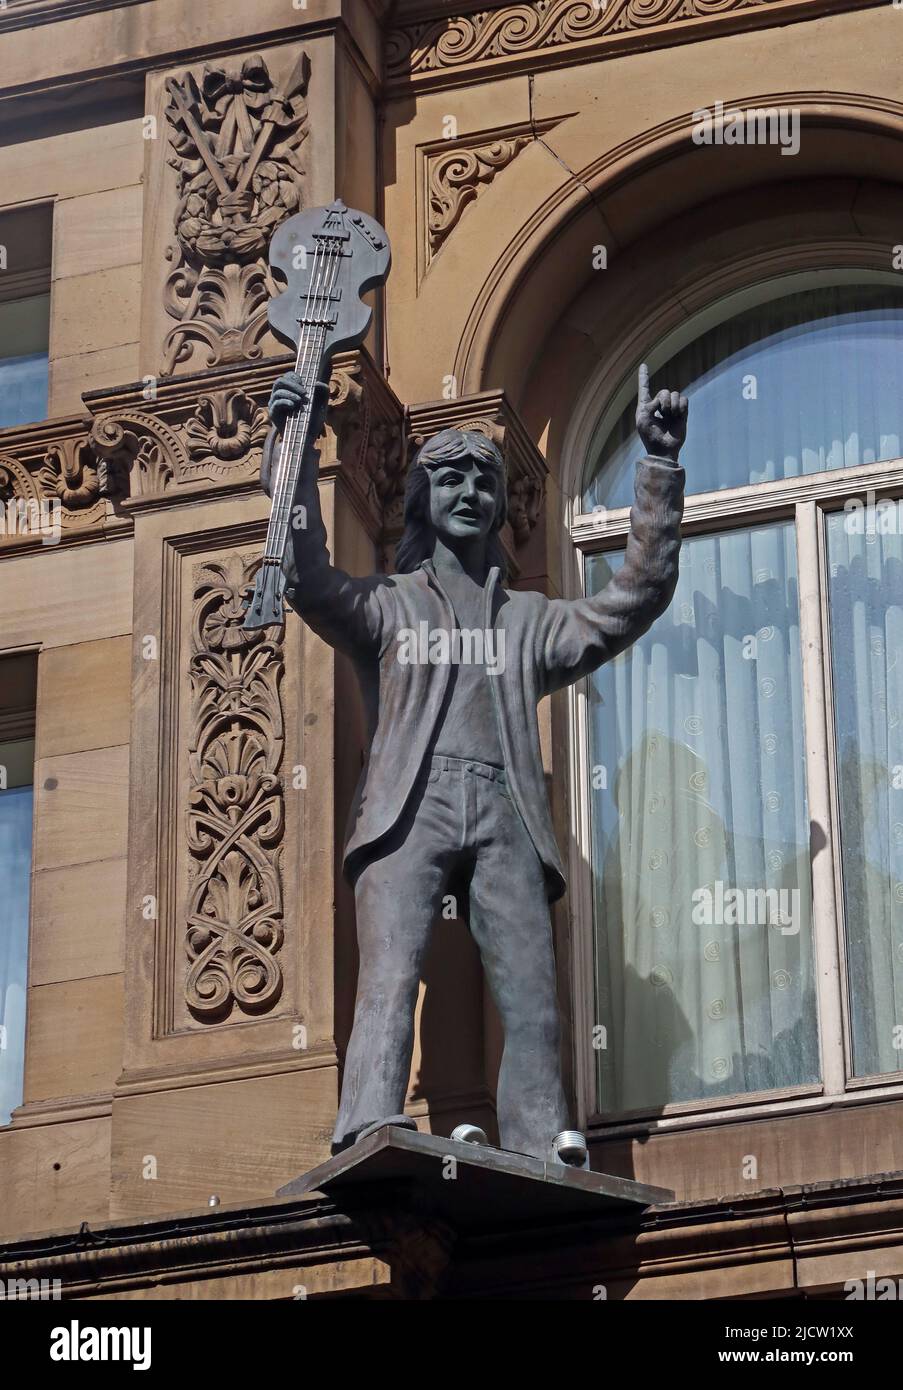 Paul McCartney - die Liverpool Beatle Statuen - die Fab Four, vor dem Hard Day's Night Hotel, Central Buildings, N John St, Liverpool L2 6RR Stockfoto